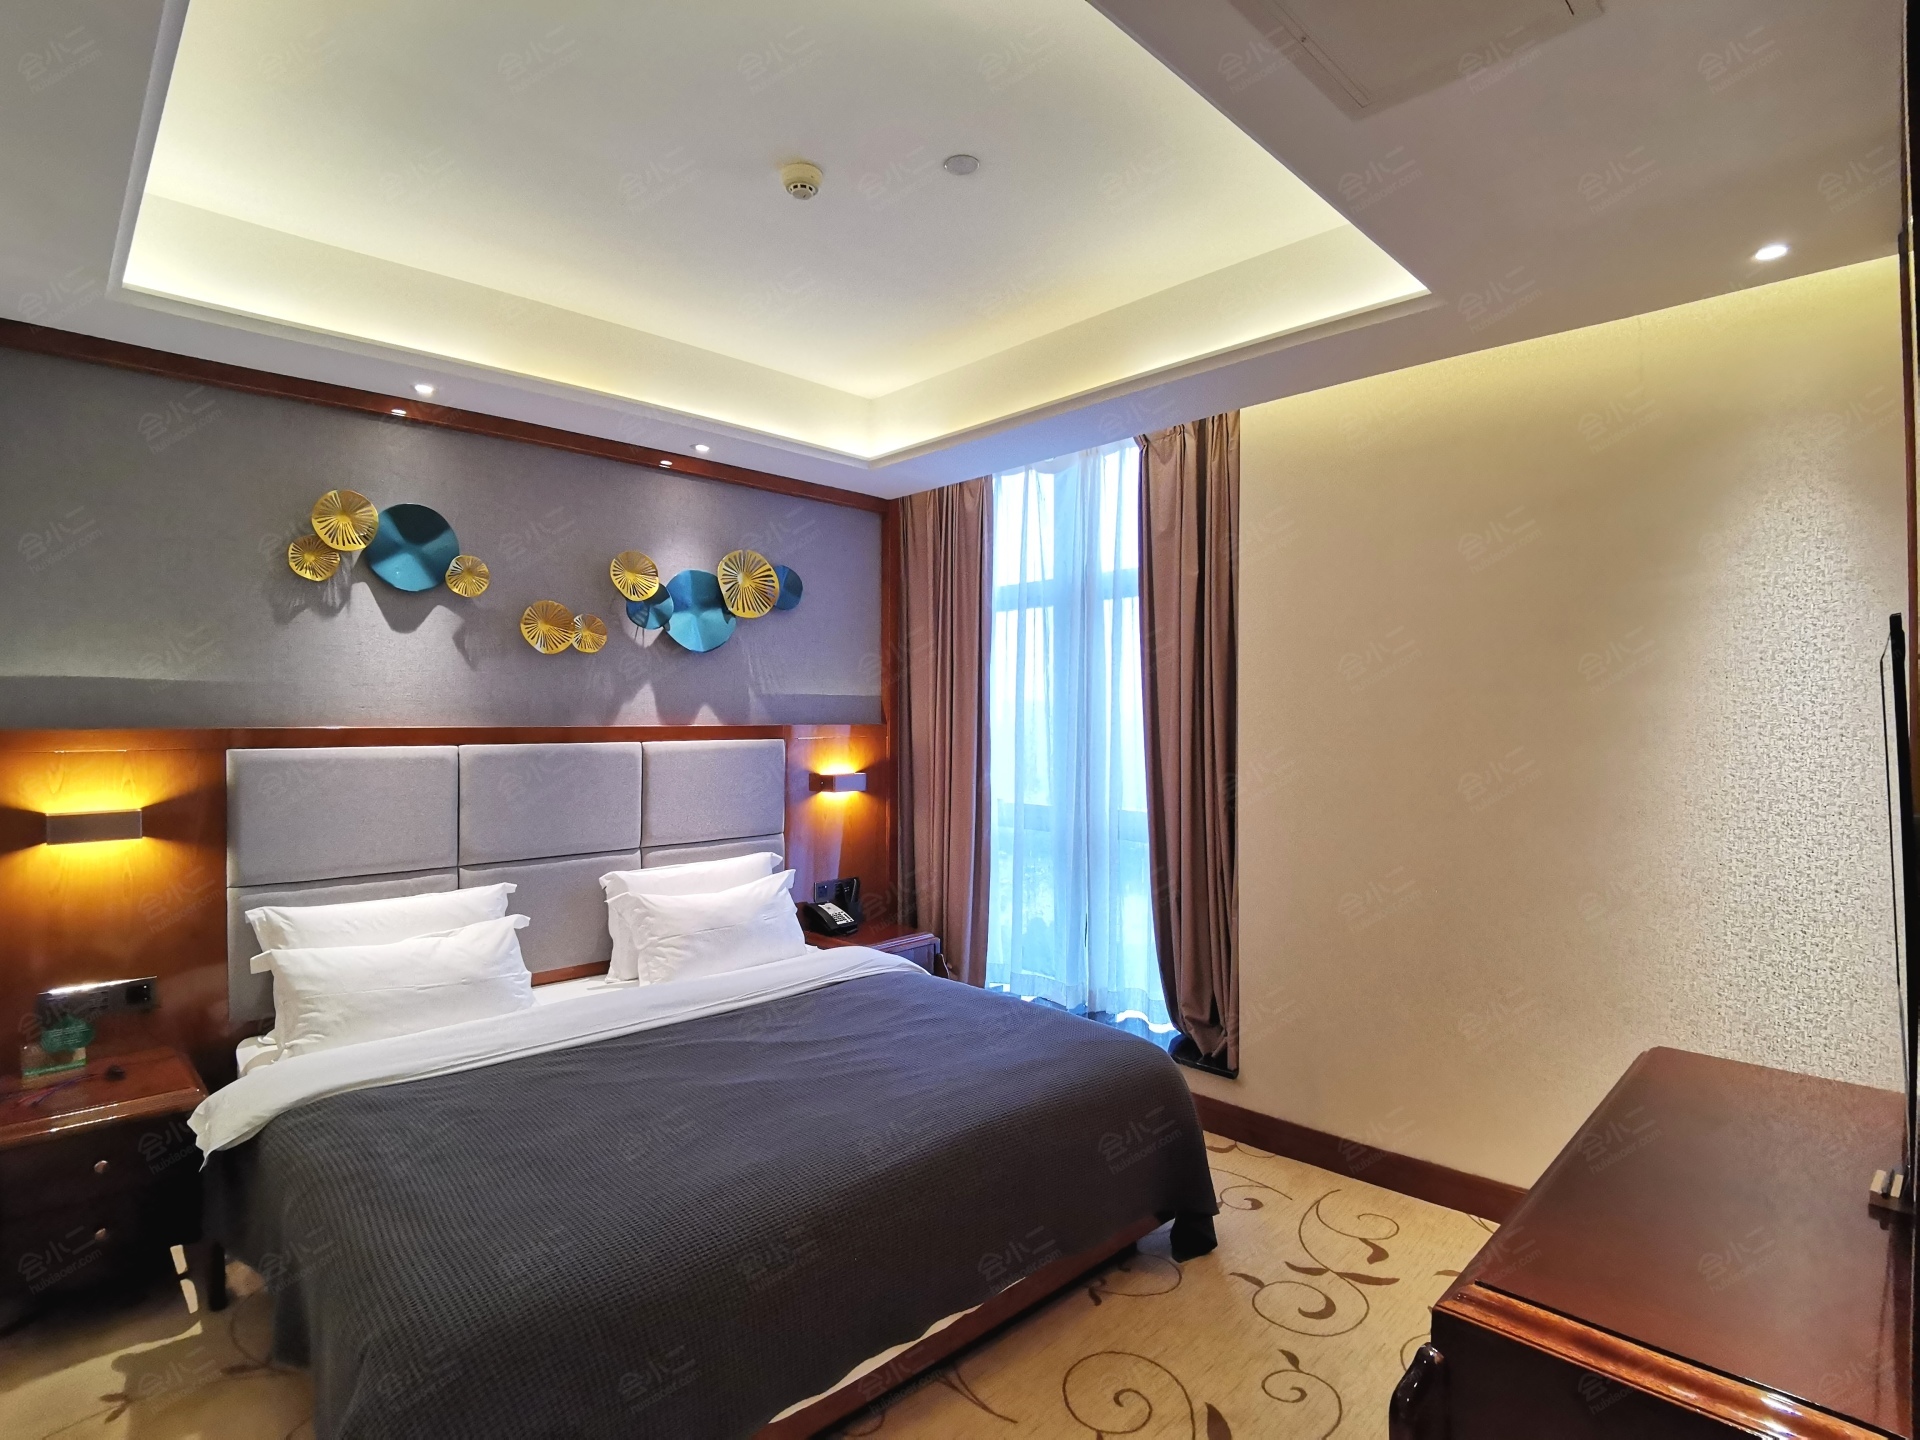 丽橙酒店·智（荆门万达广场智慧店） in Jingmen City | 2023 Updated prices, deals - Klook United States